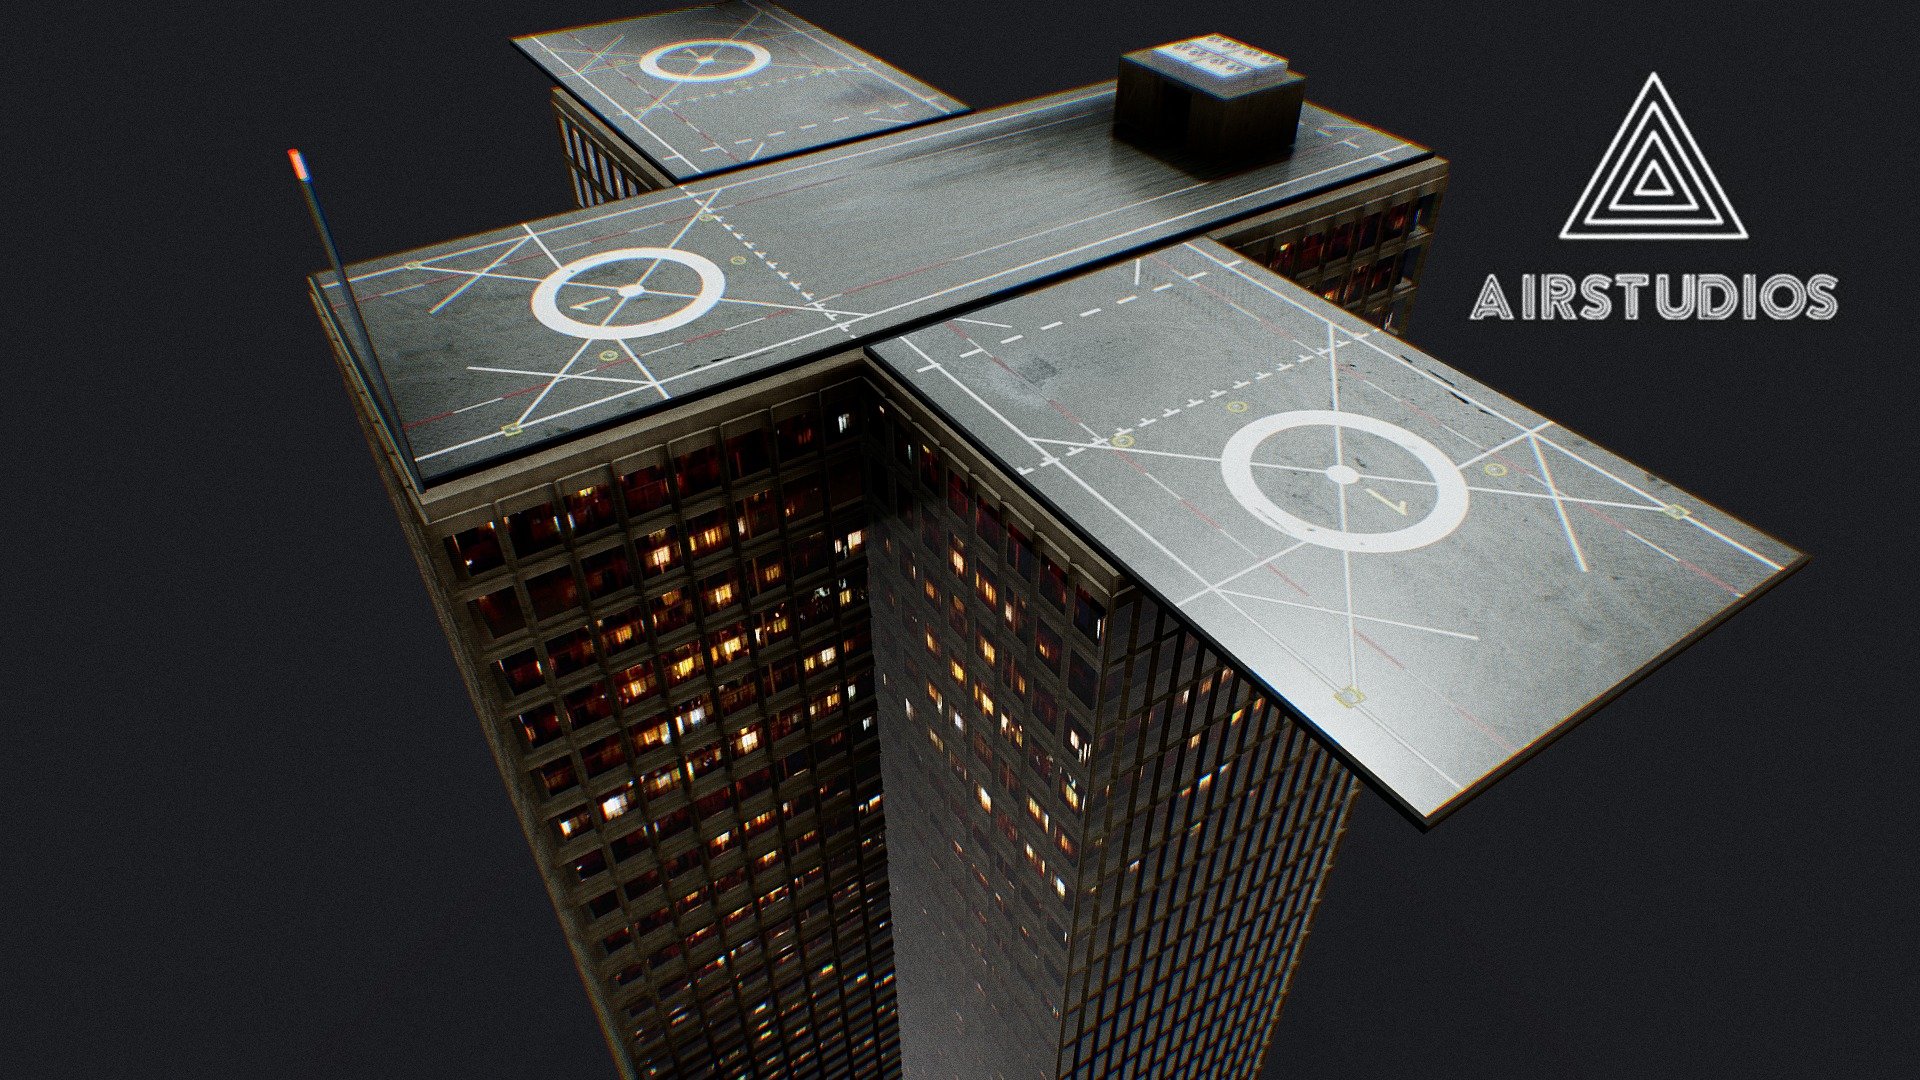 Low Poly - Futuristic Sci-fi Skyscraper Building

Made in Blender - Low Poly - Futuristic Sci-fi Skyscraper Building - Buy Royalty Free 3D model by AirStudios (@sebbe613) 3d model